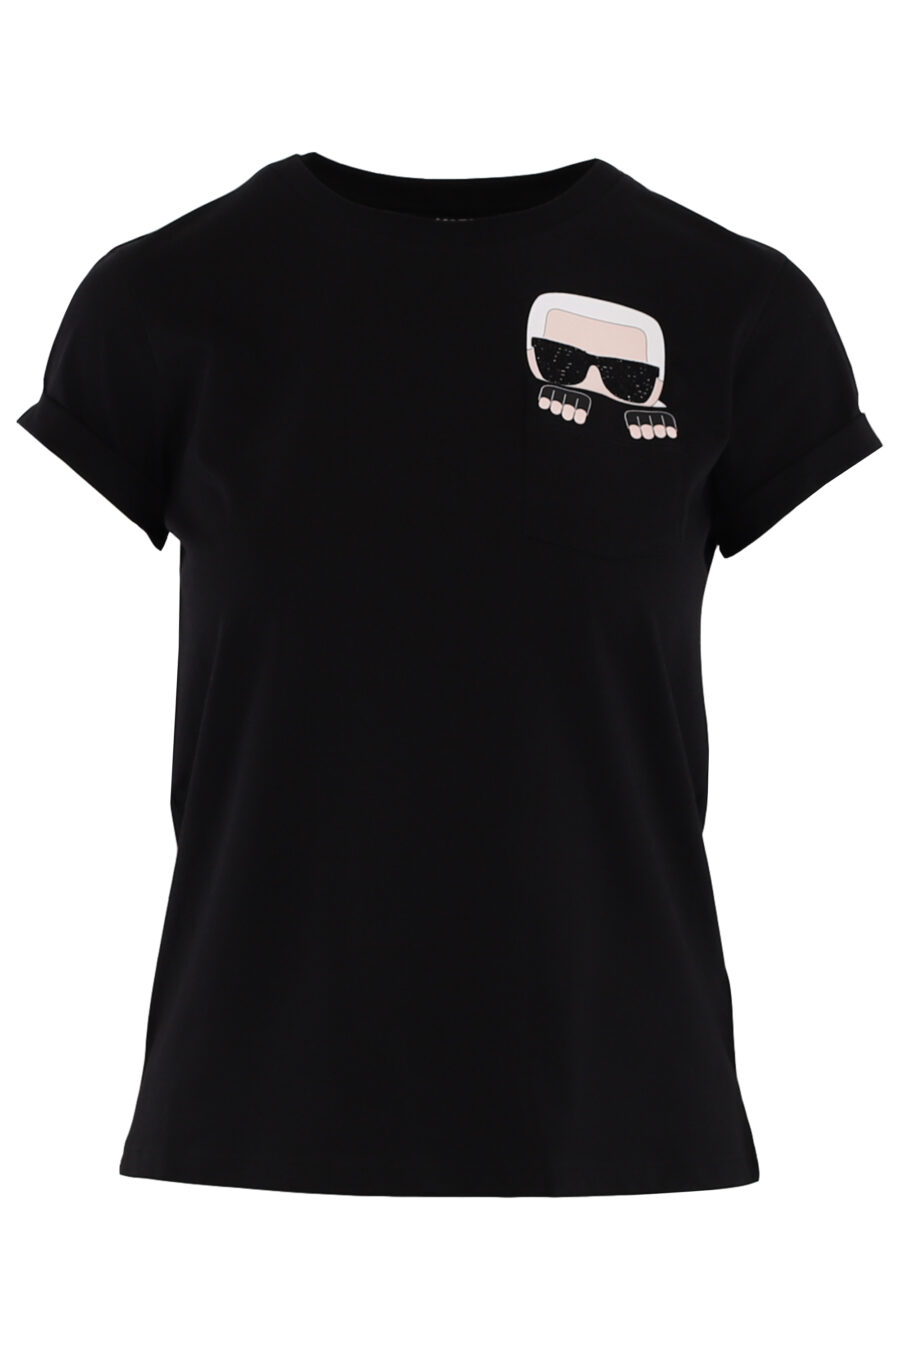 Camiseta negra con logo "karl" bolsillo - IMG 0724